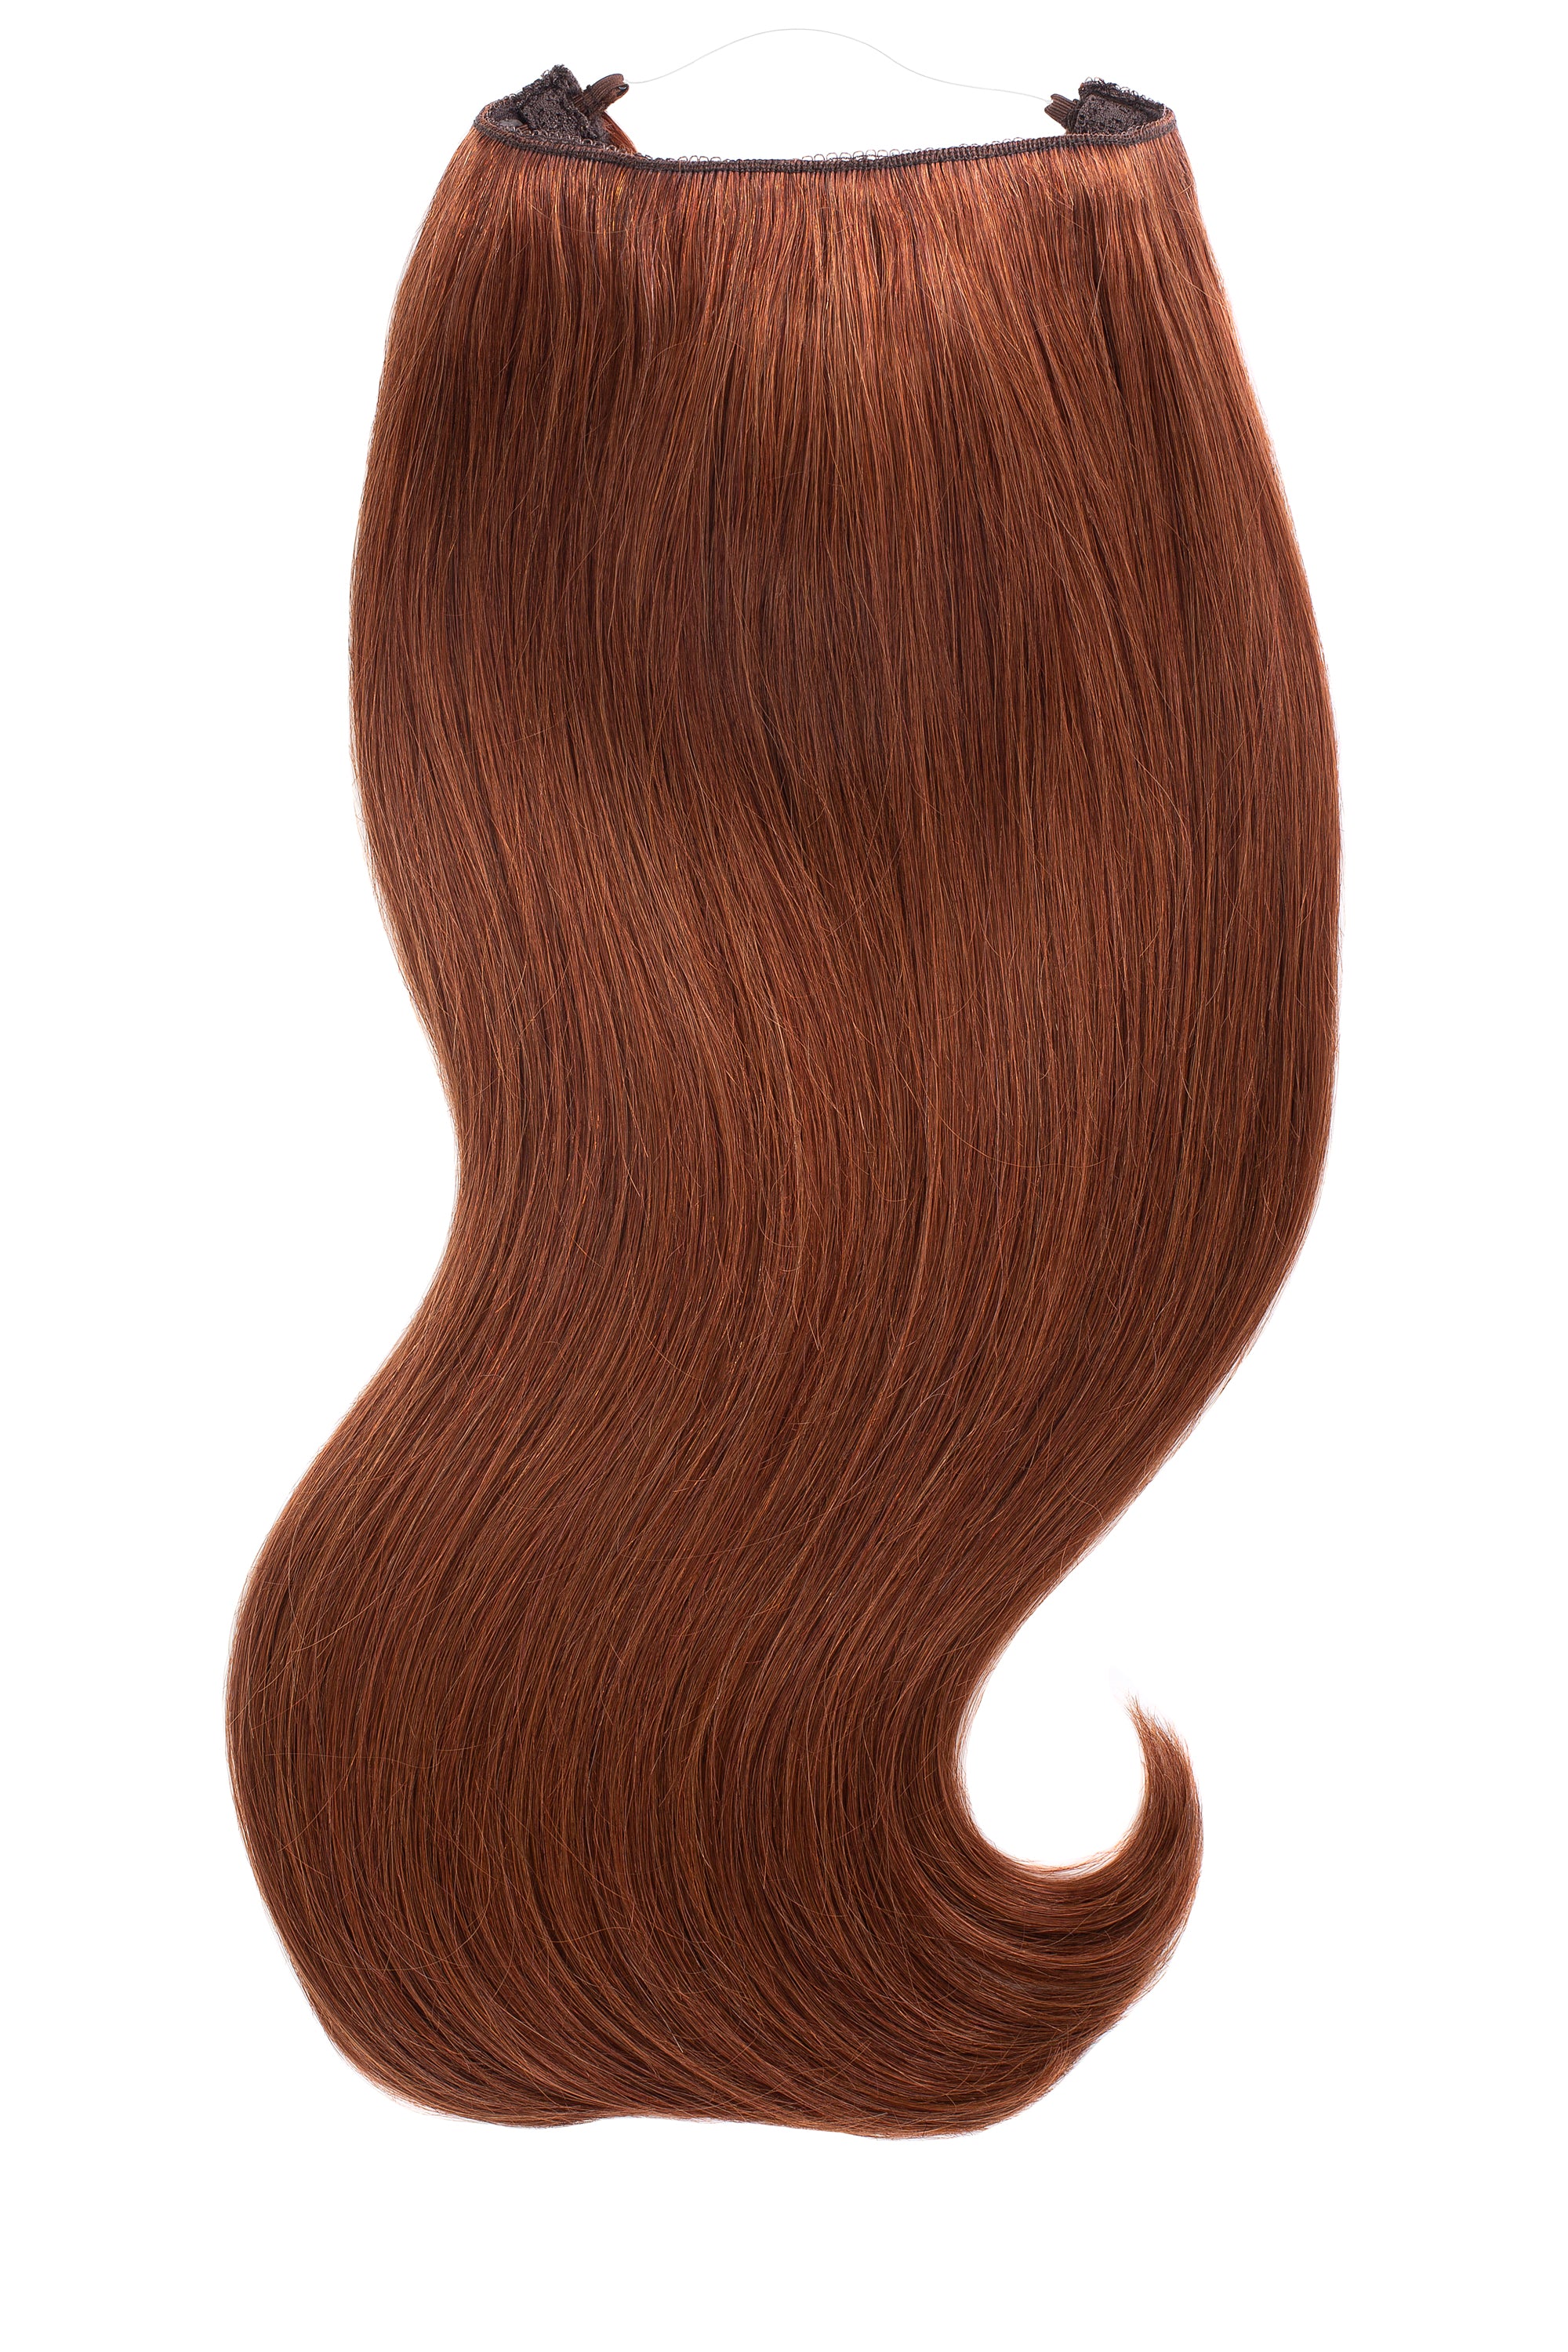 27 HQ Images Auburn Hair Extensions : Pre Bonded Hair Extensions Straight Auburn Hair 18 Inch